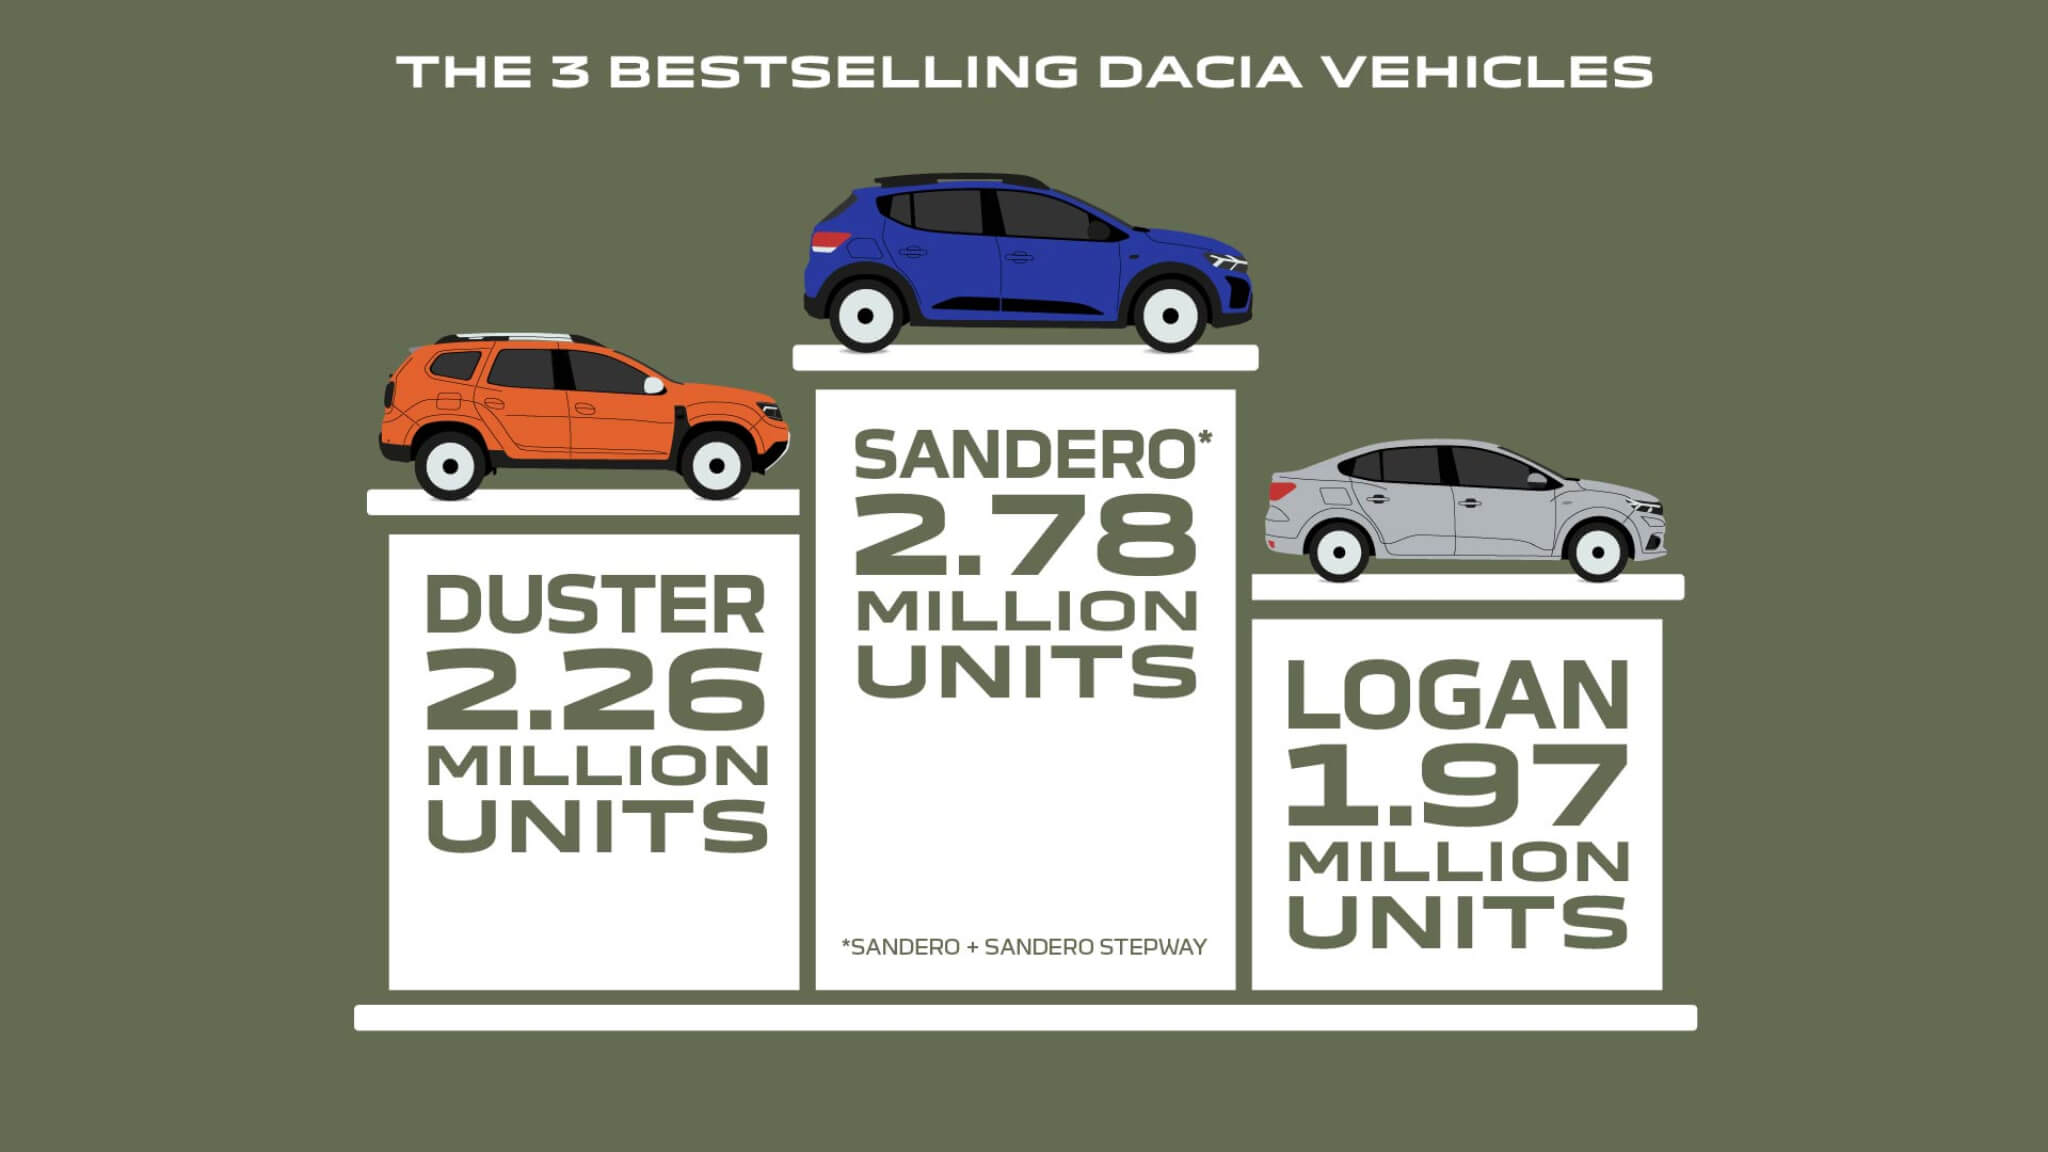 Os modelos mais vendidos da Dacia